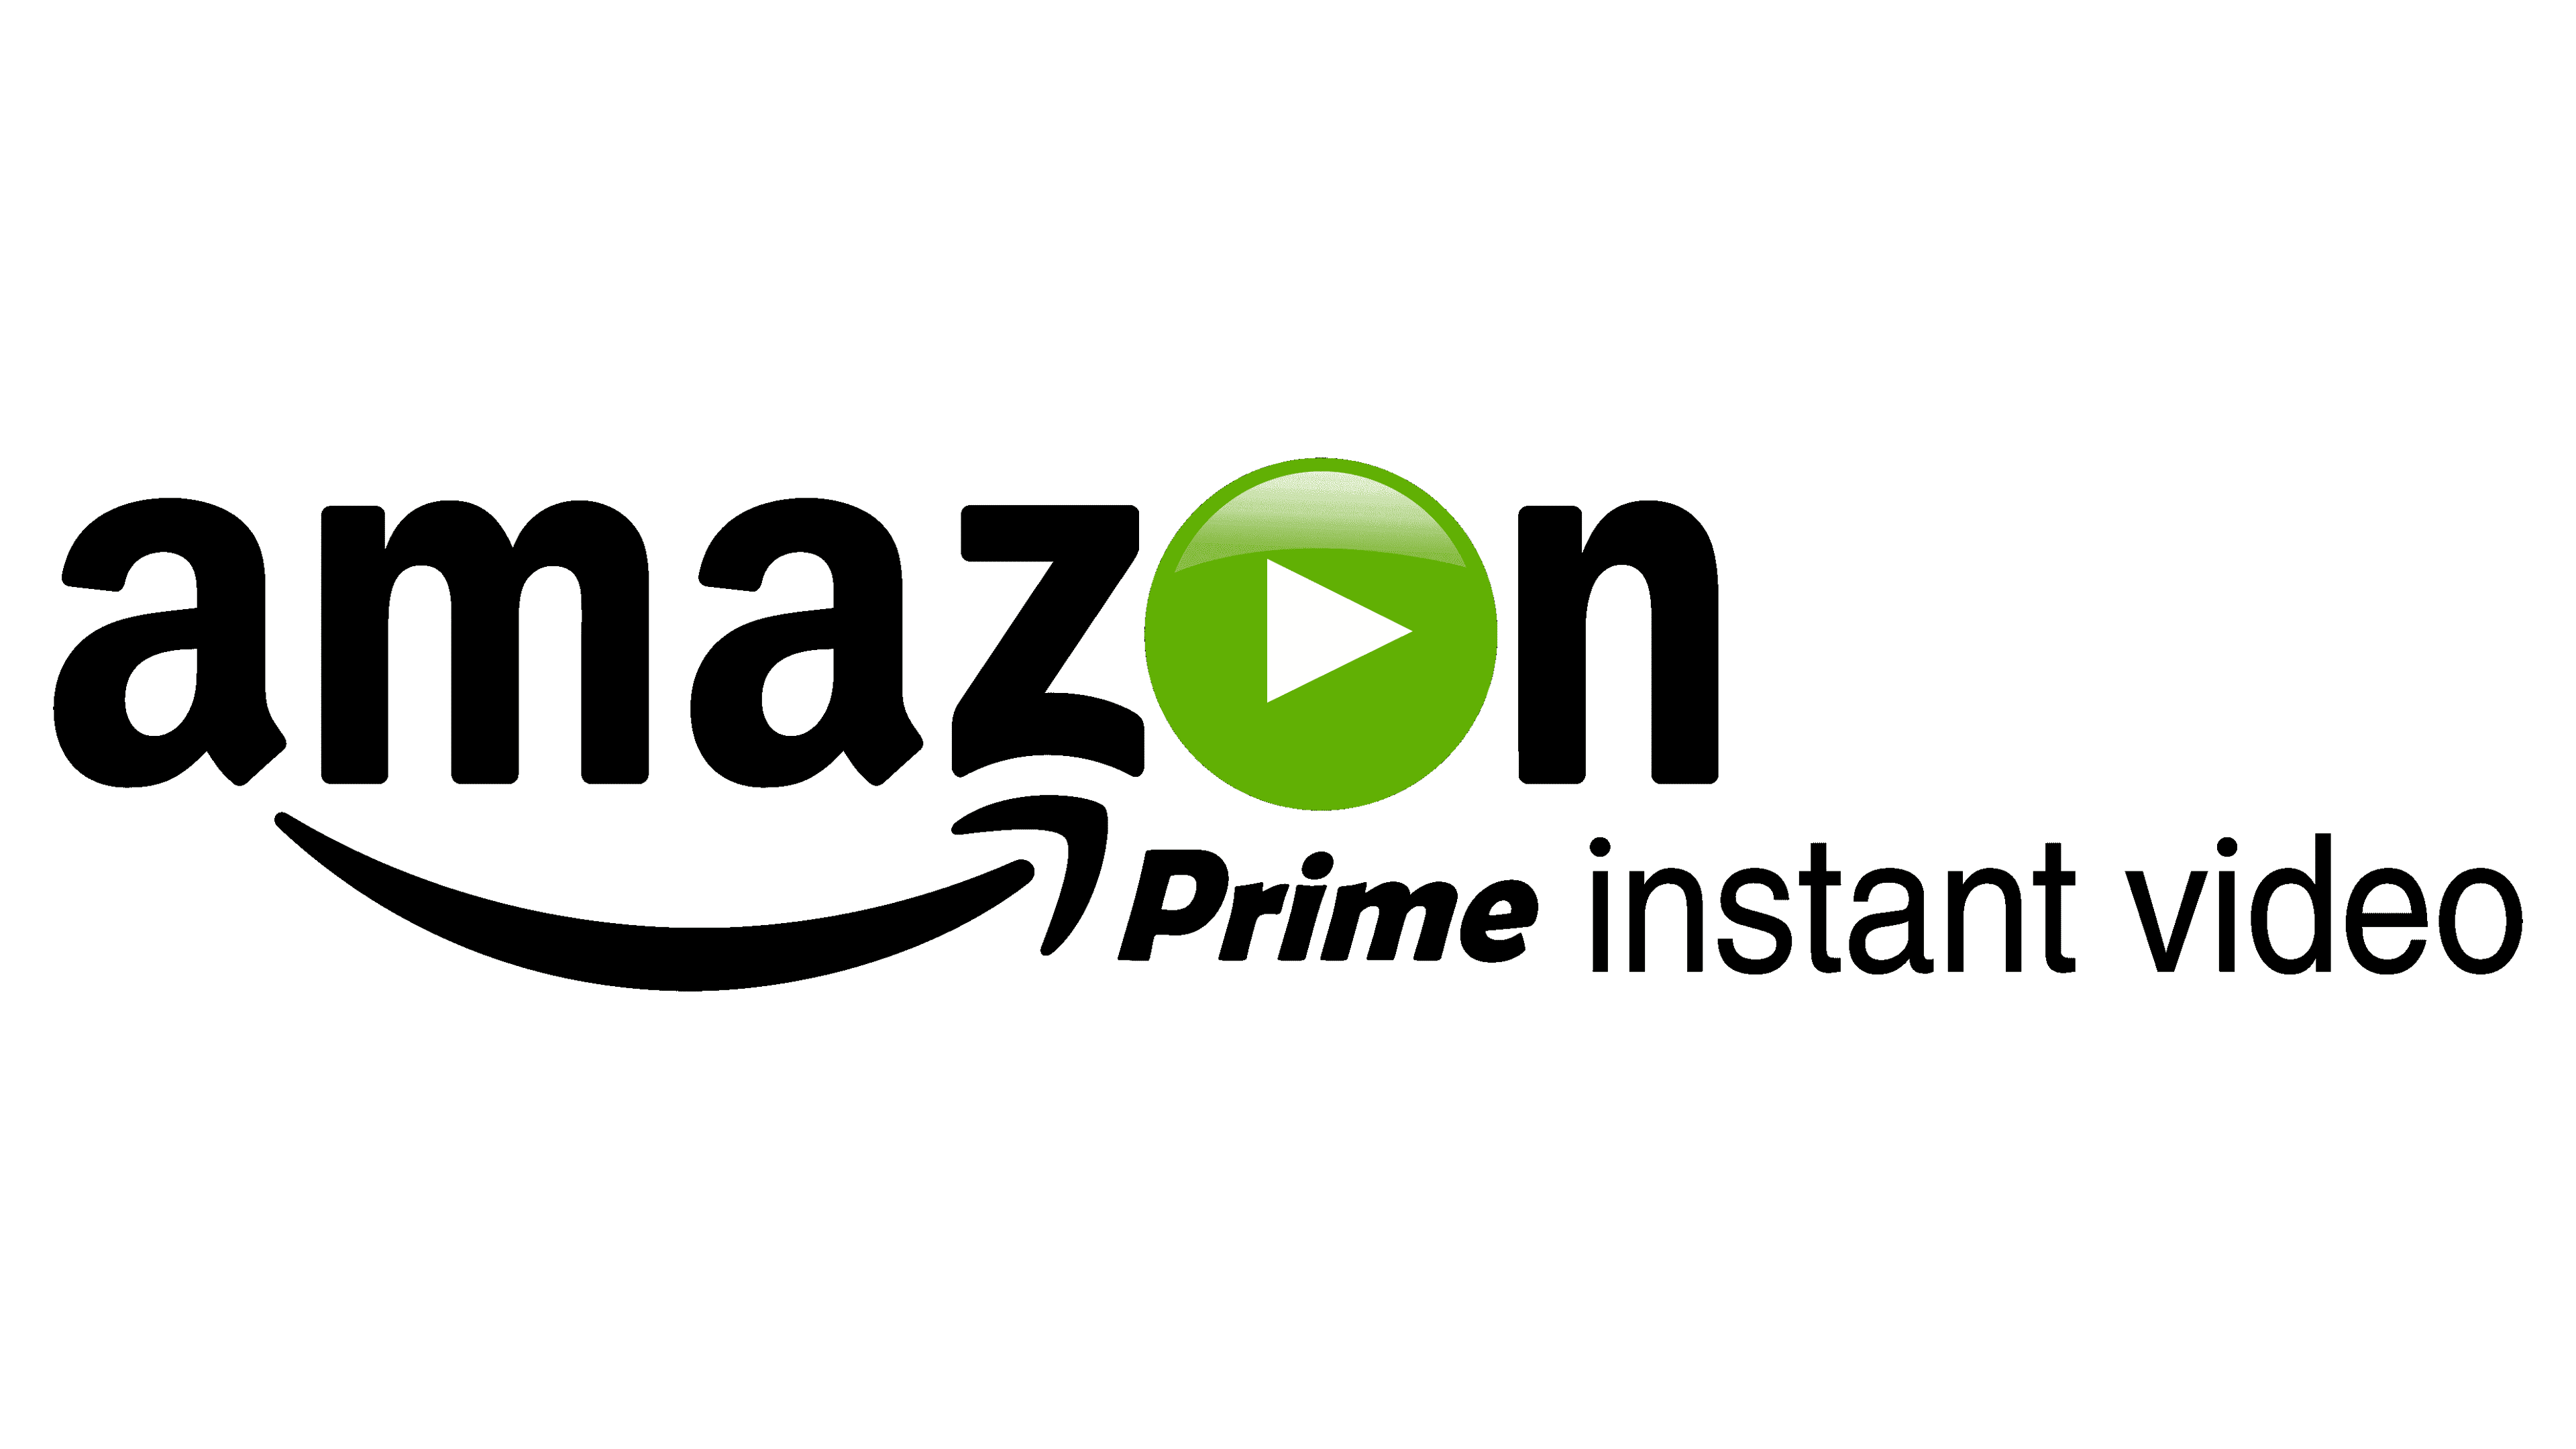 amazon prime instant video ad